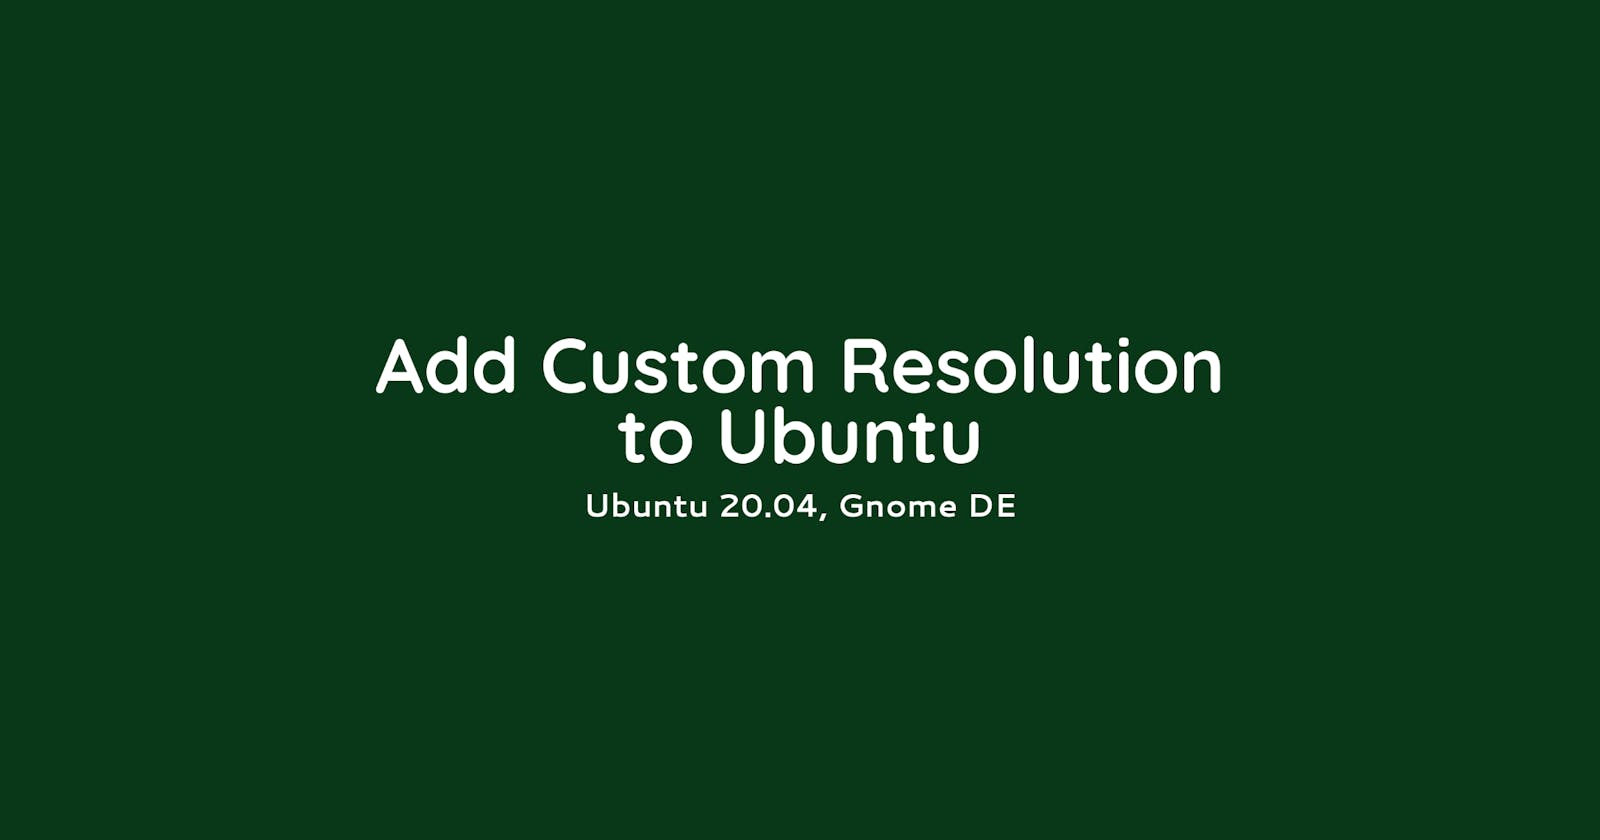 Hand Notes: Add a custom resolution in Ubuntu 20.04 (Gnome DE)